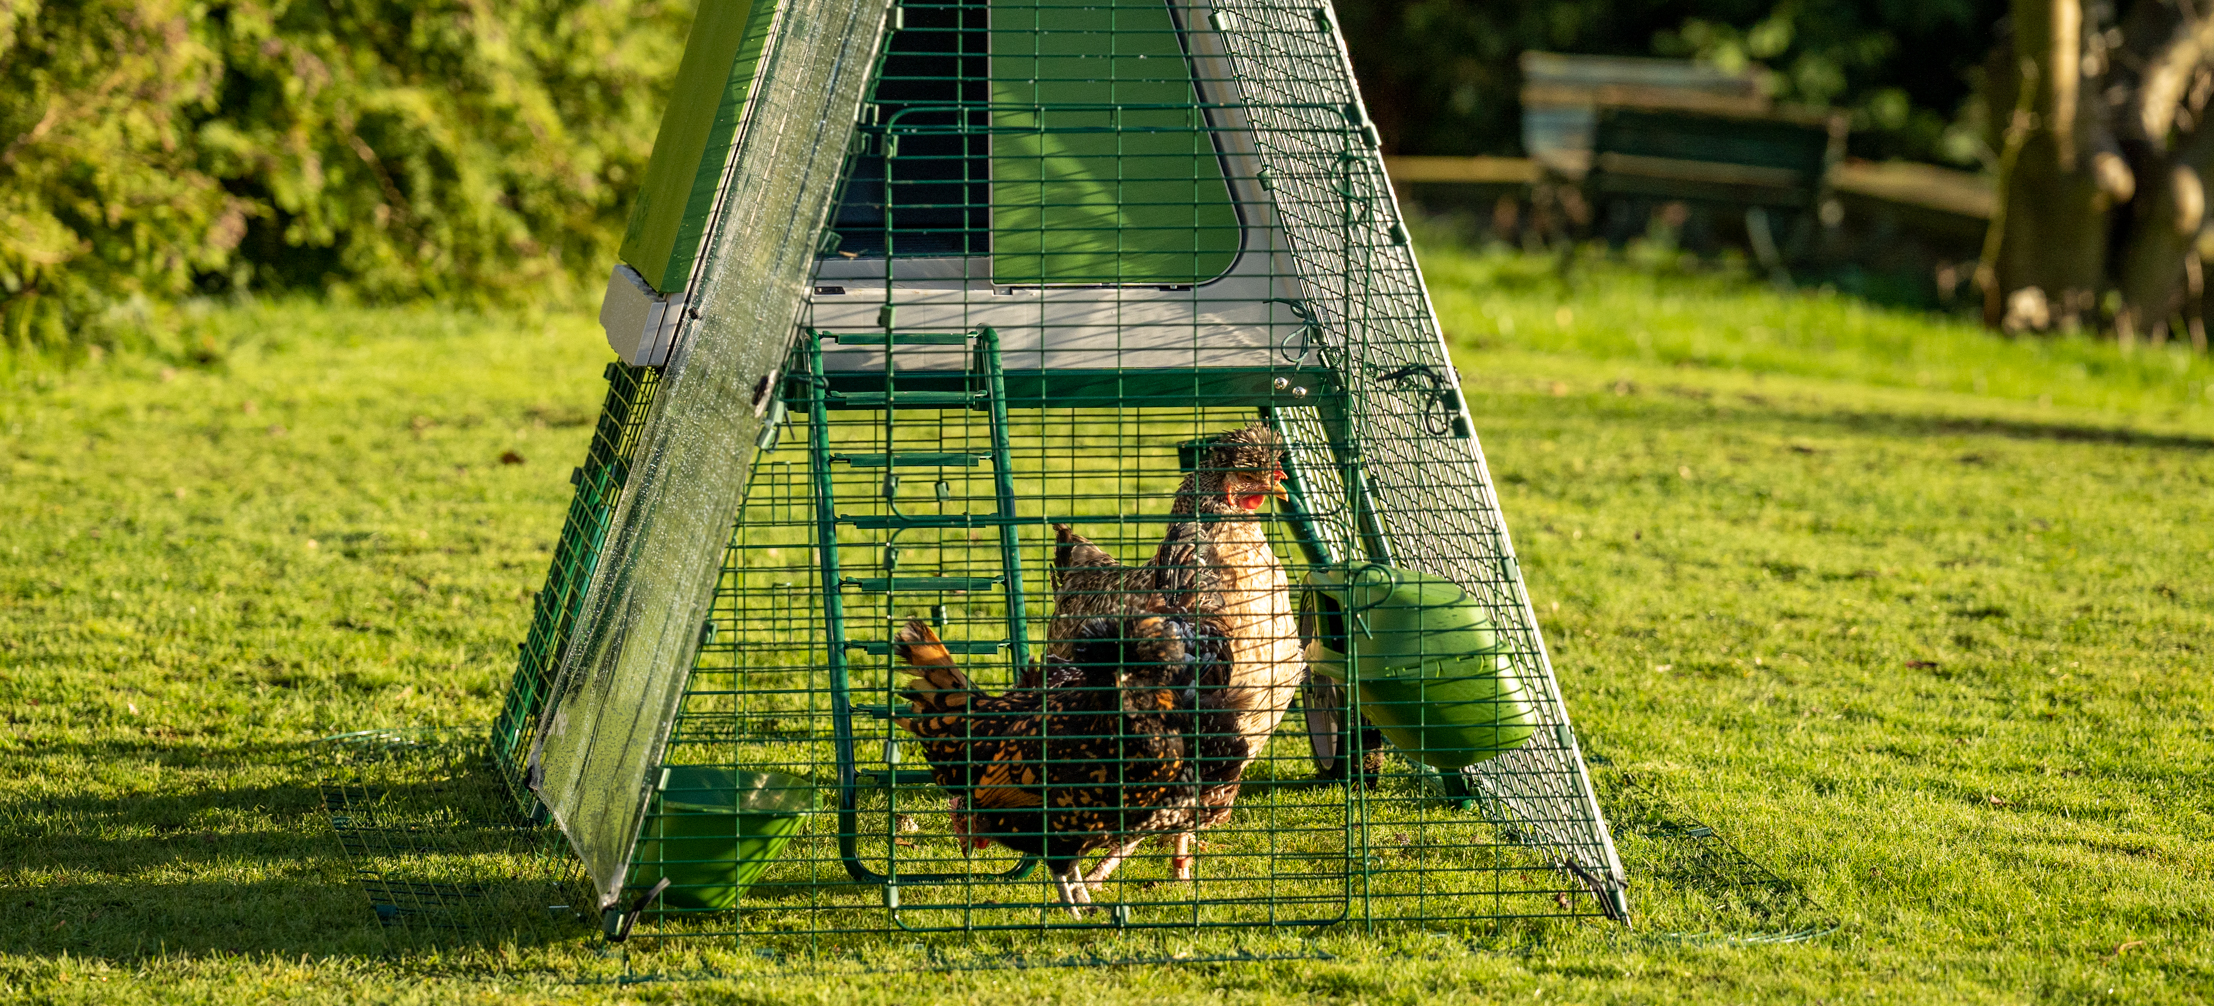 Hens inside Eglu Go UP raised chicken coop run.